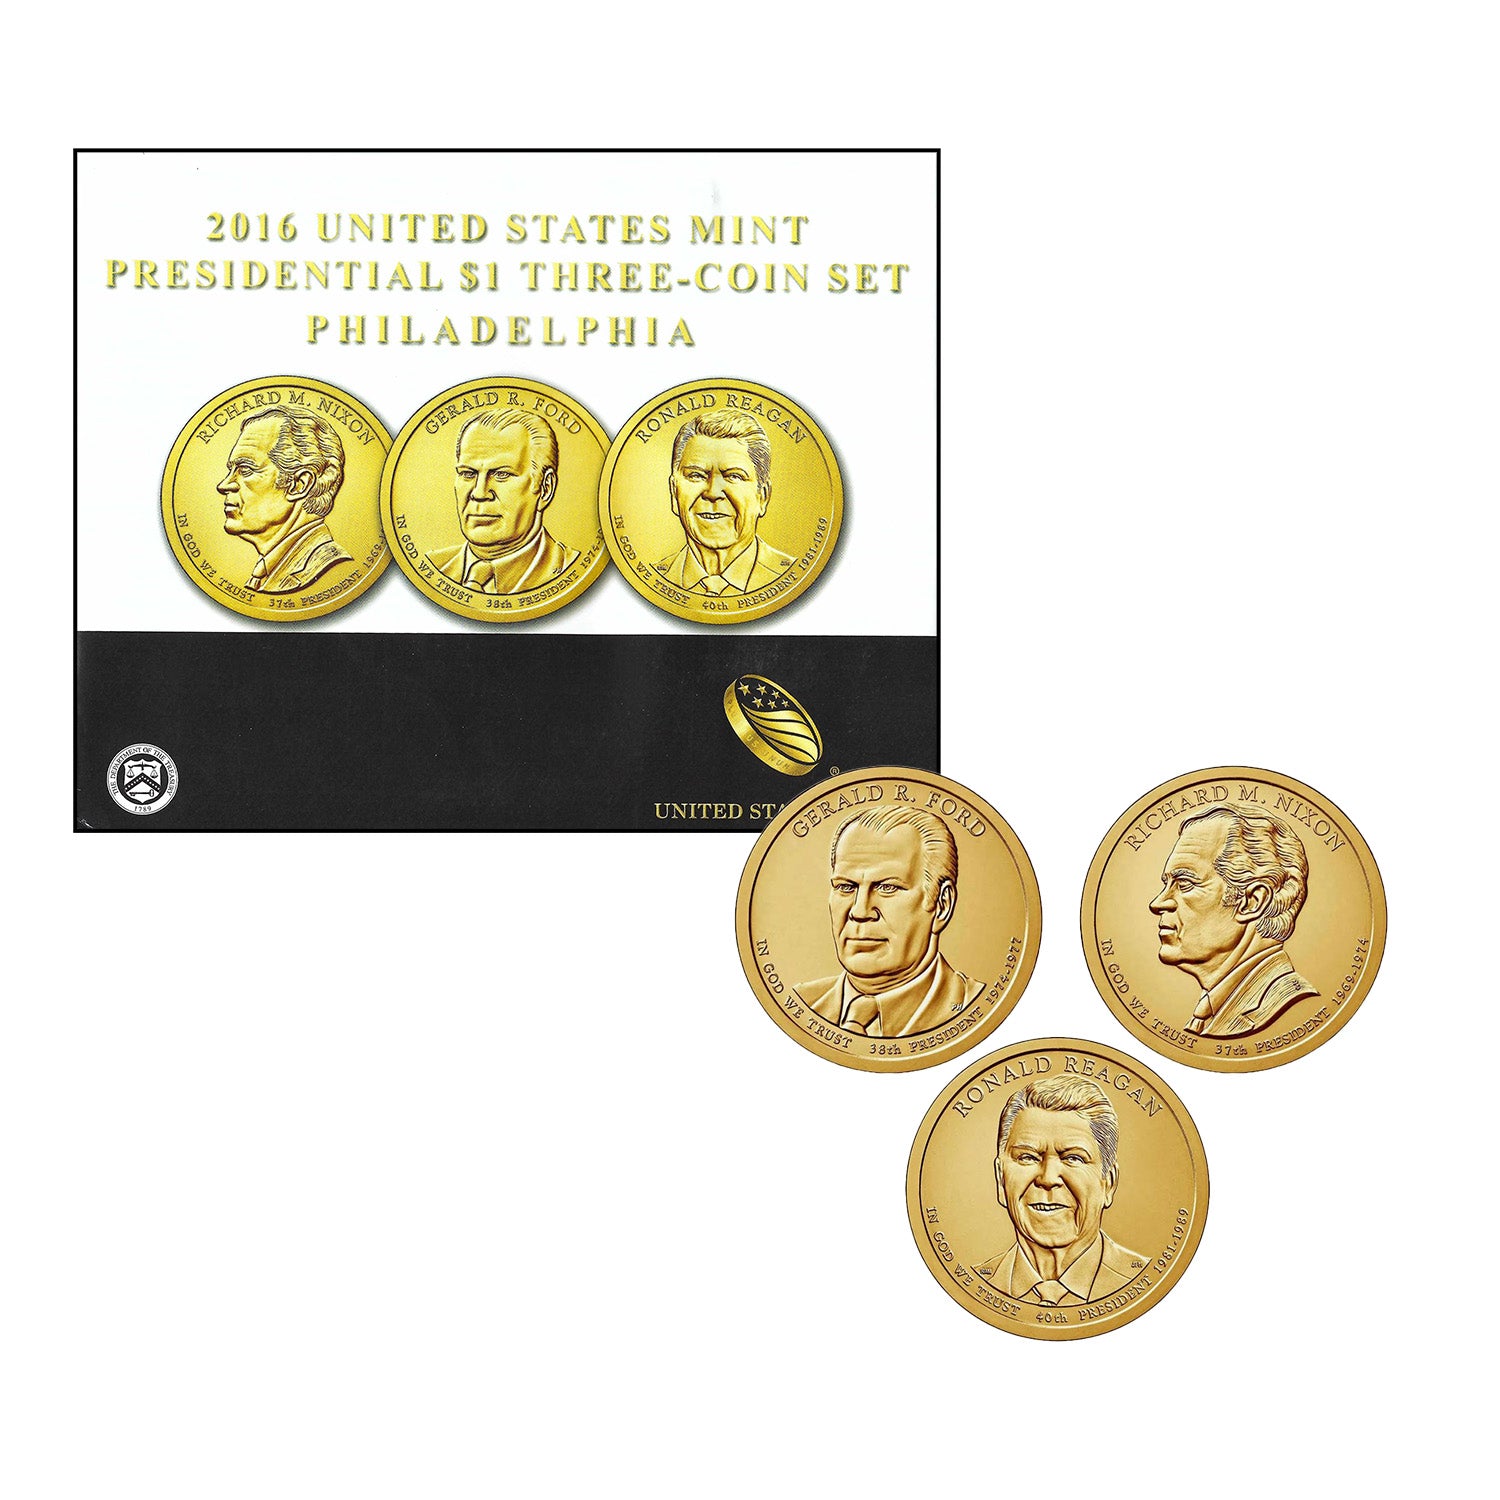 2016 United States Mint Presidential $1 Three-Coin Set Philadelphia